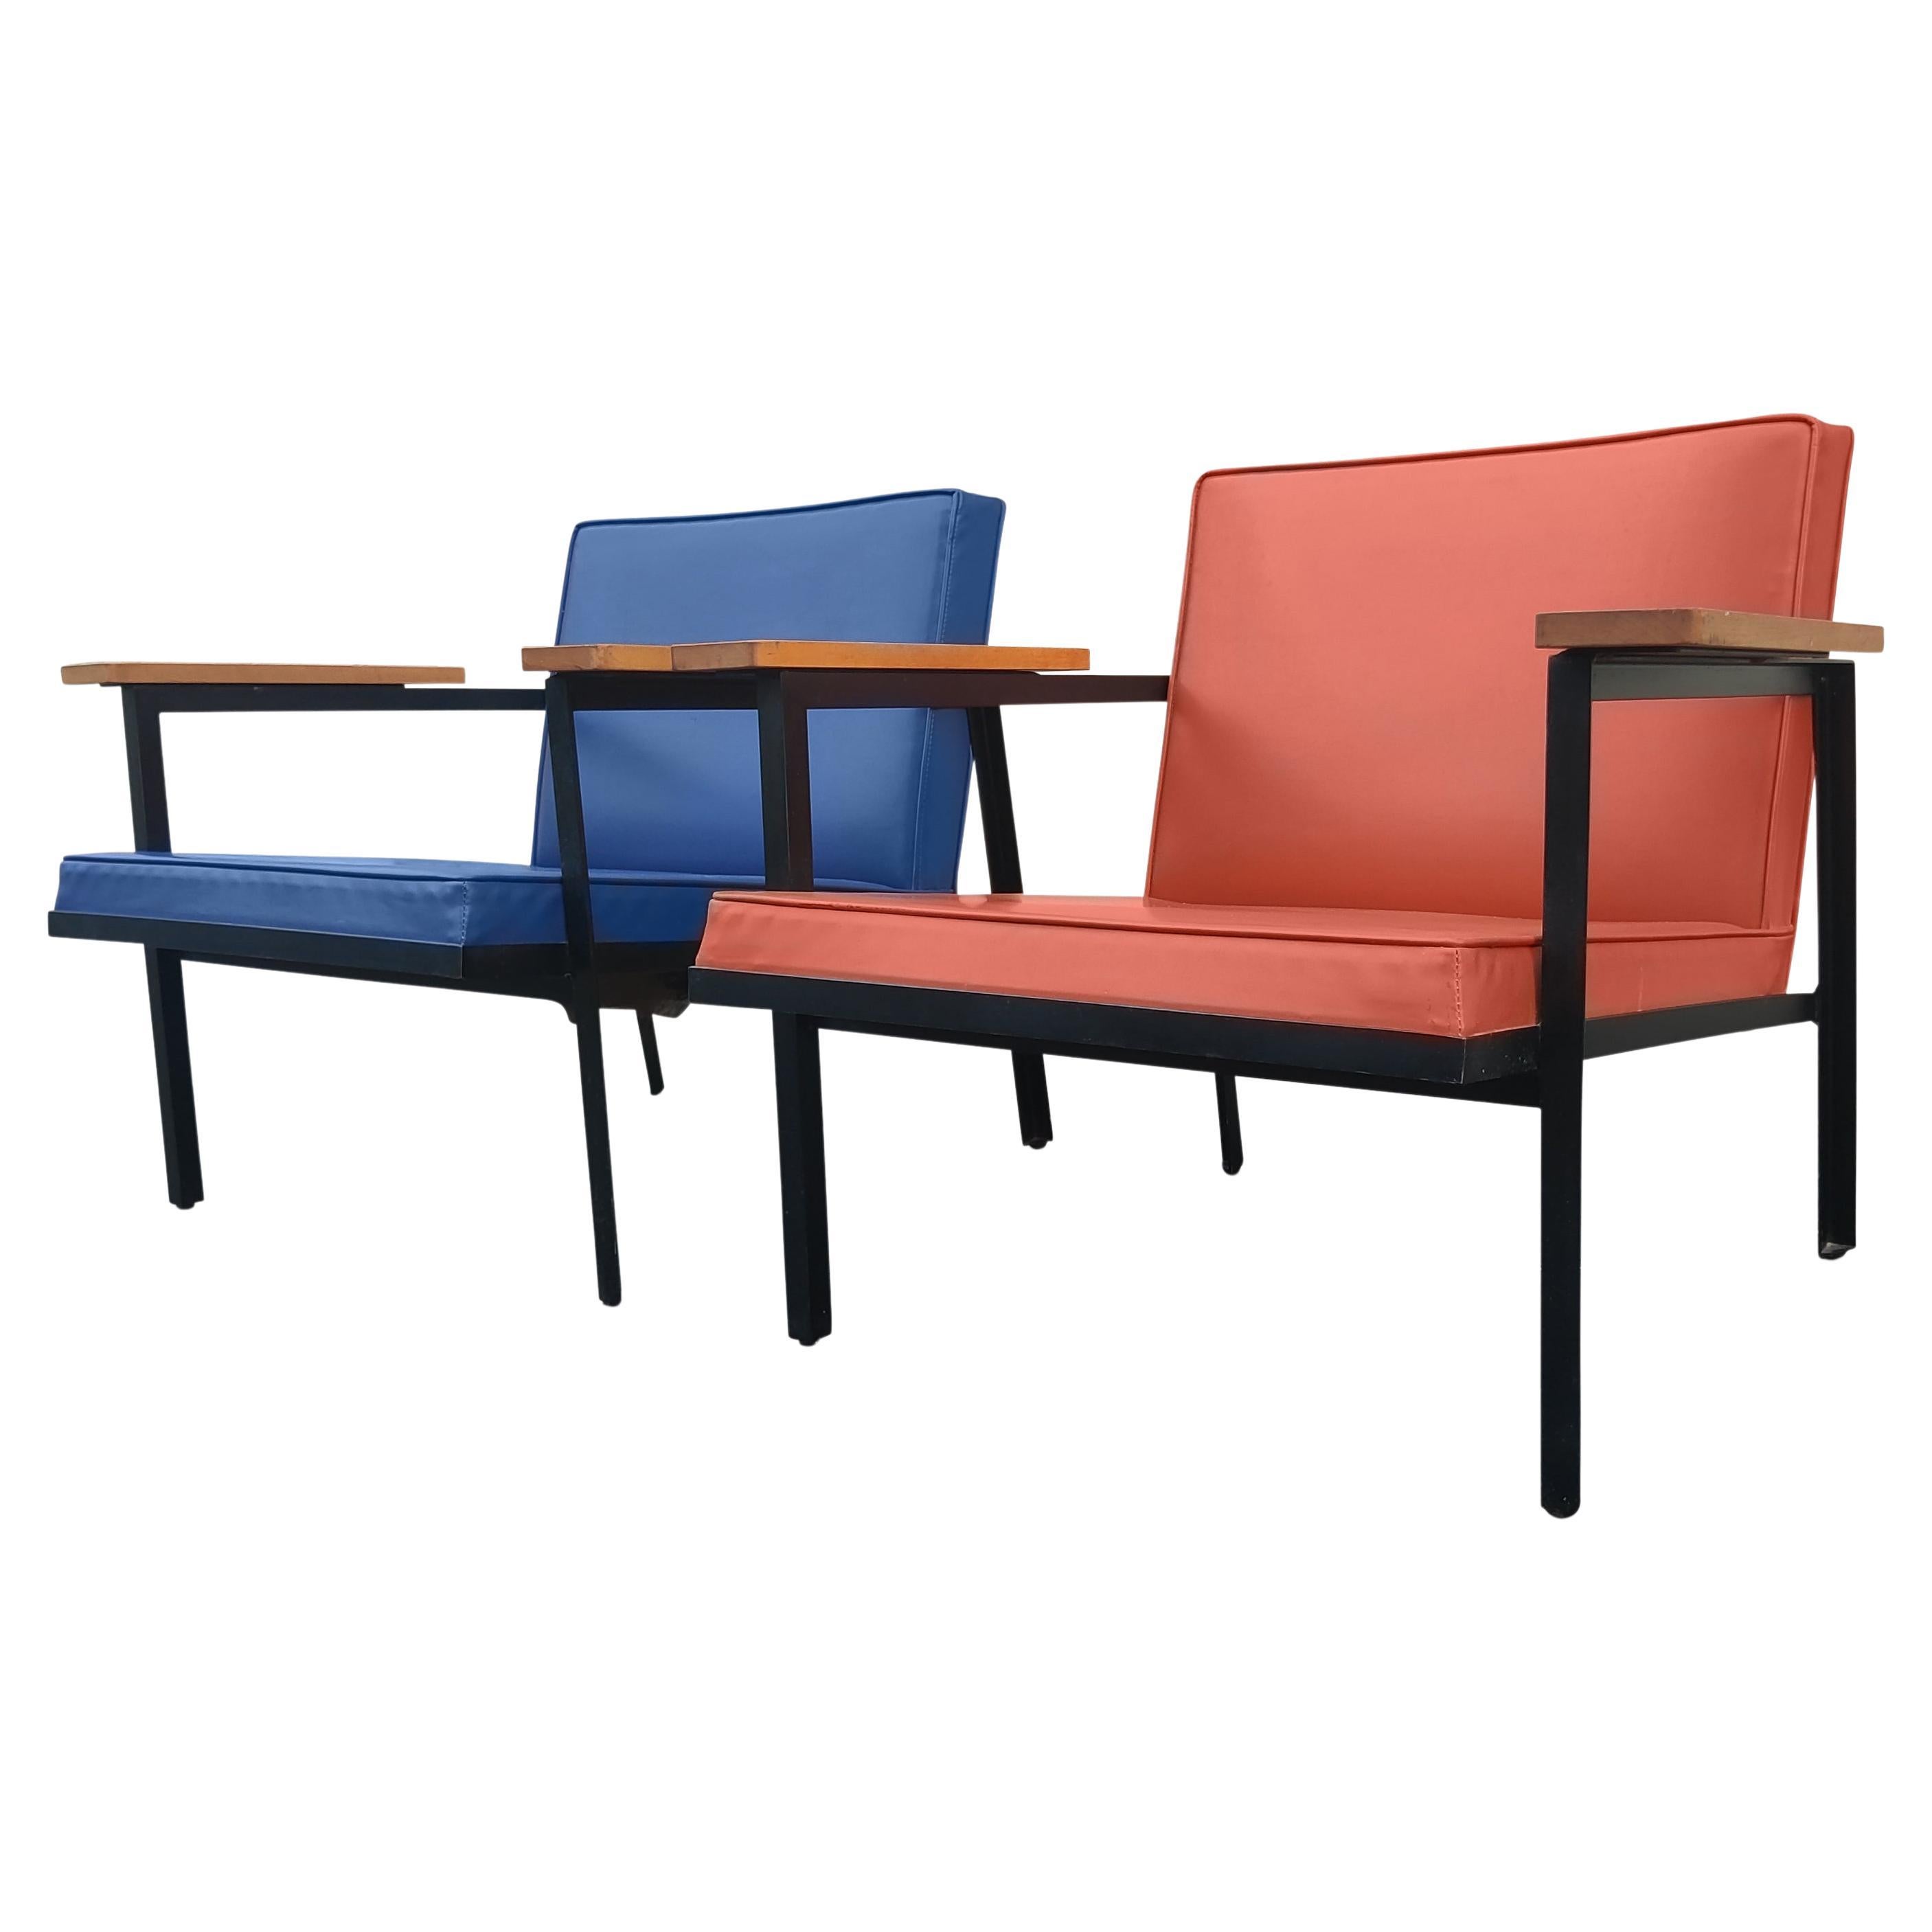 Rare & Original George Nelson Steel Frame Lounge Chairs Pair Herman Miller 1950s